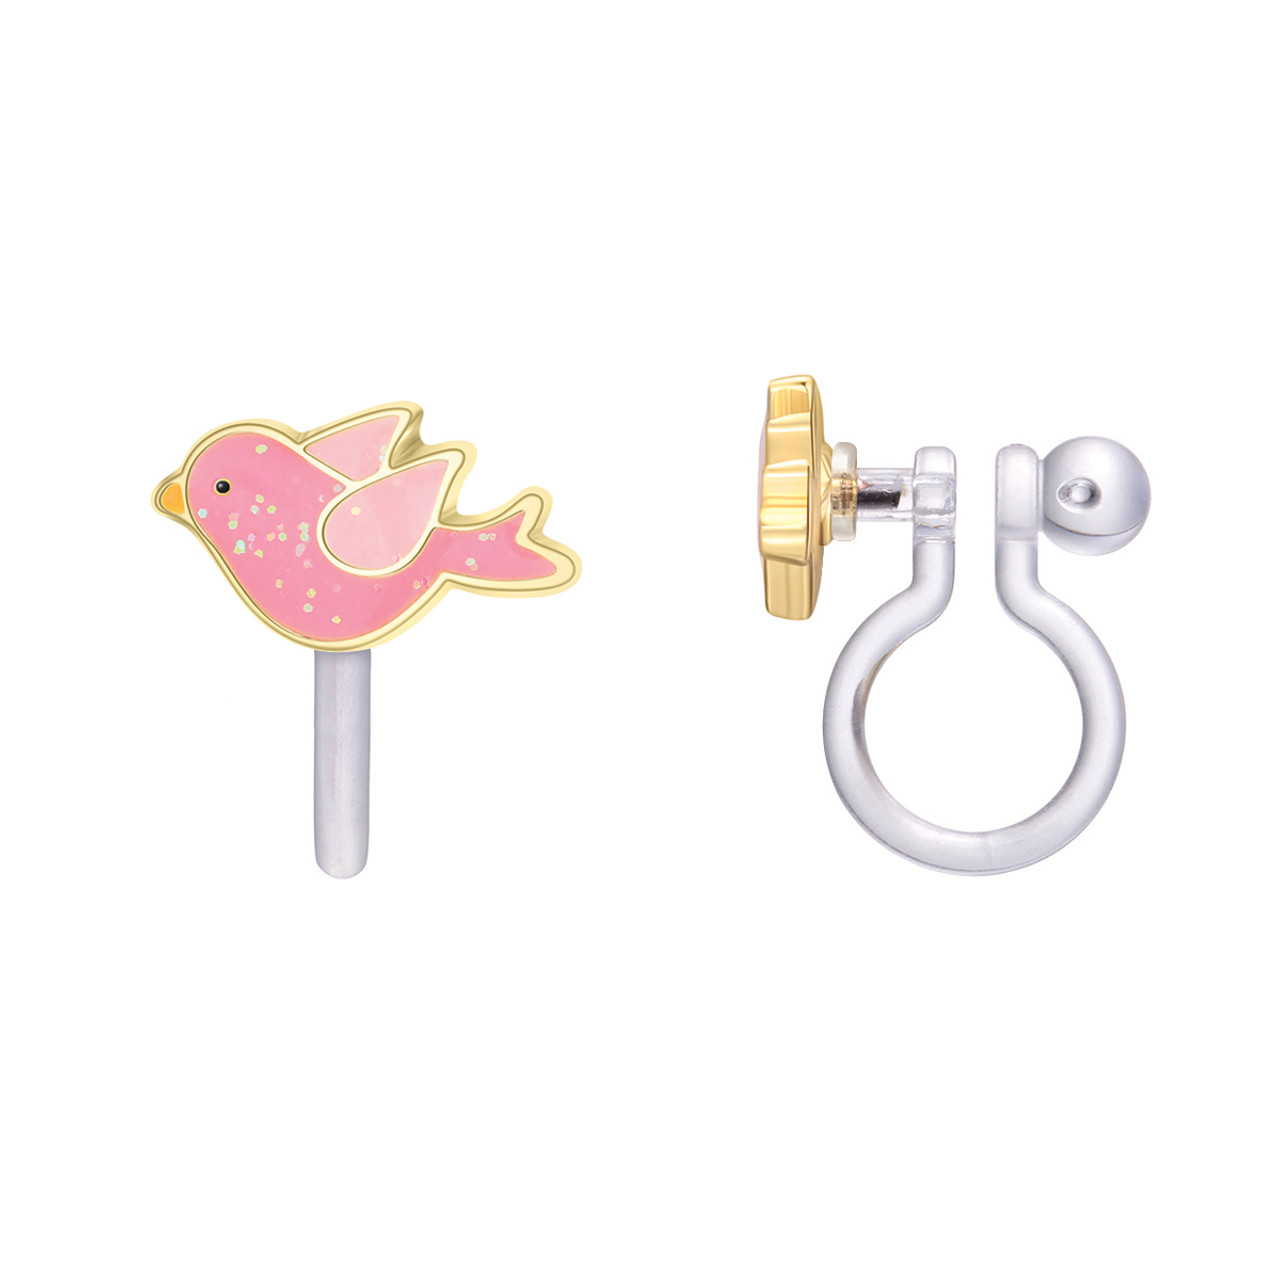 Buy Trendilook Pink Plastic Tik-Tak Clip-on Earrings for Girls at Amazon.in